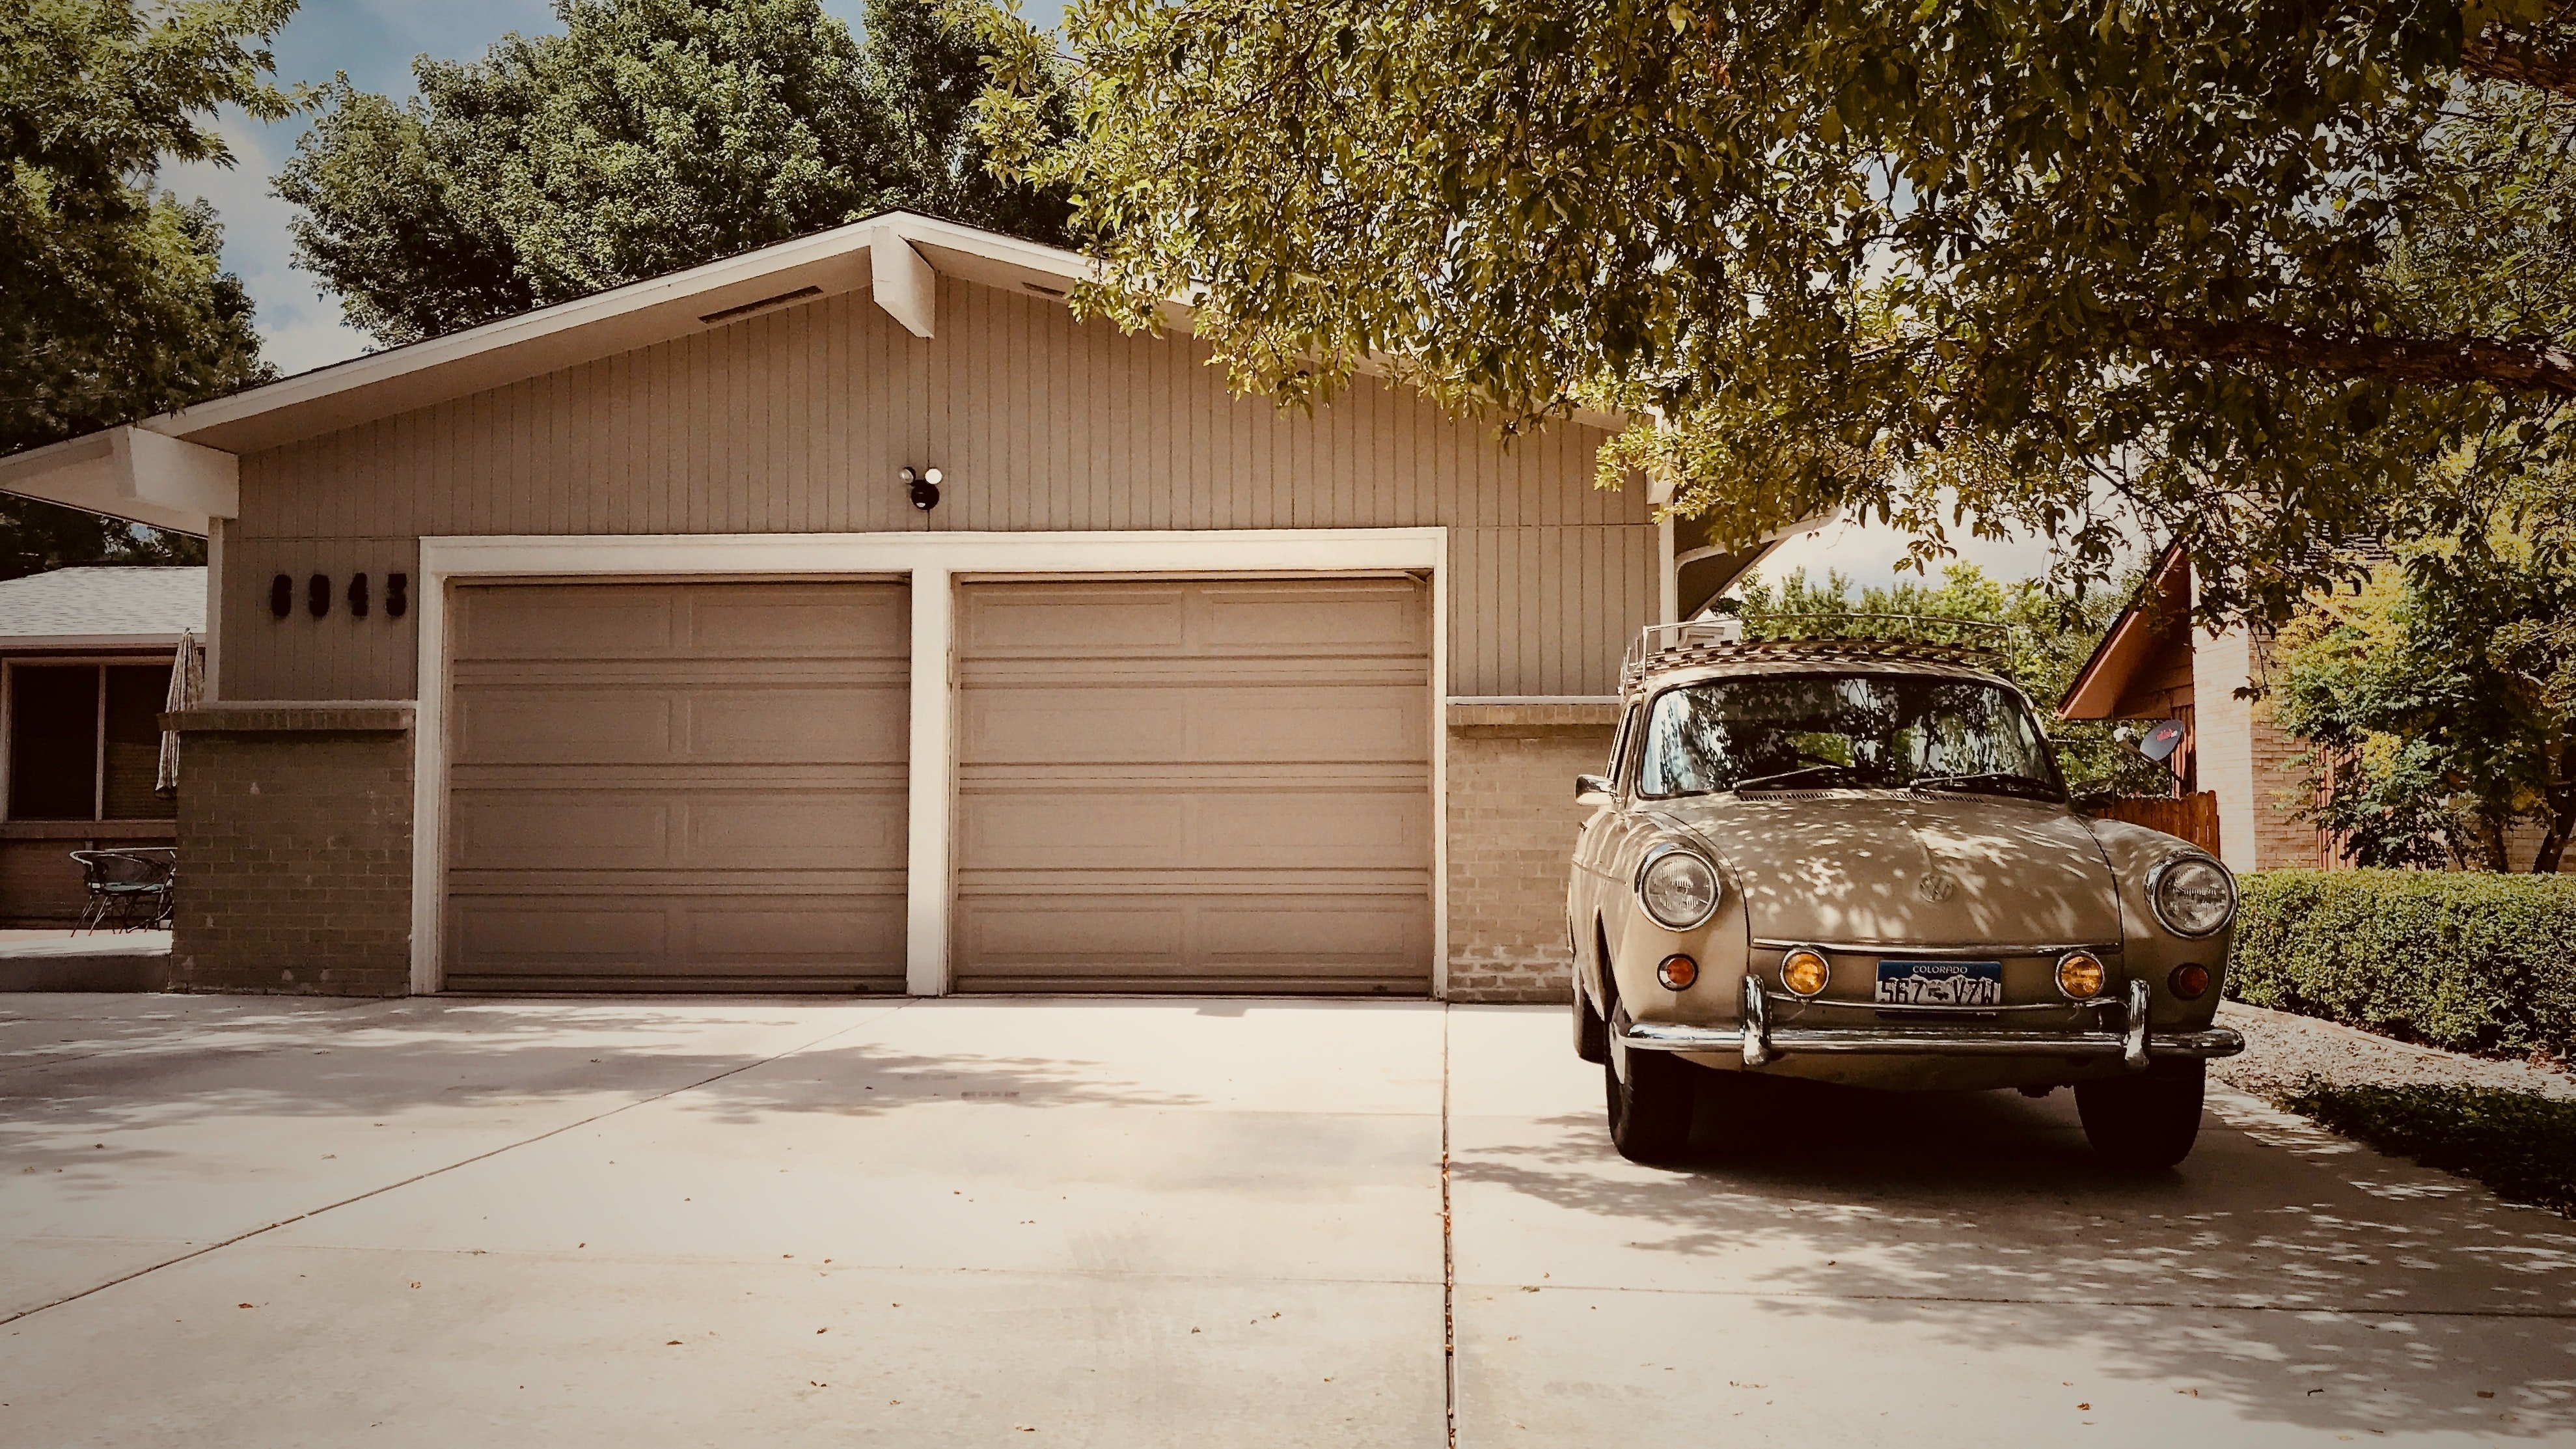 Garaje de una casa. | Foto: Unsplash